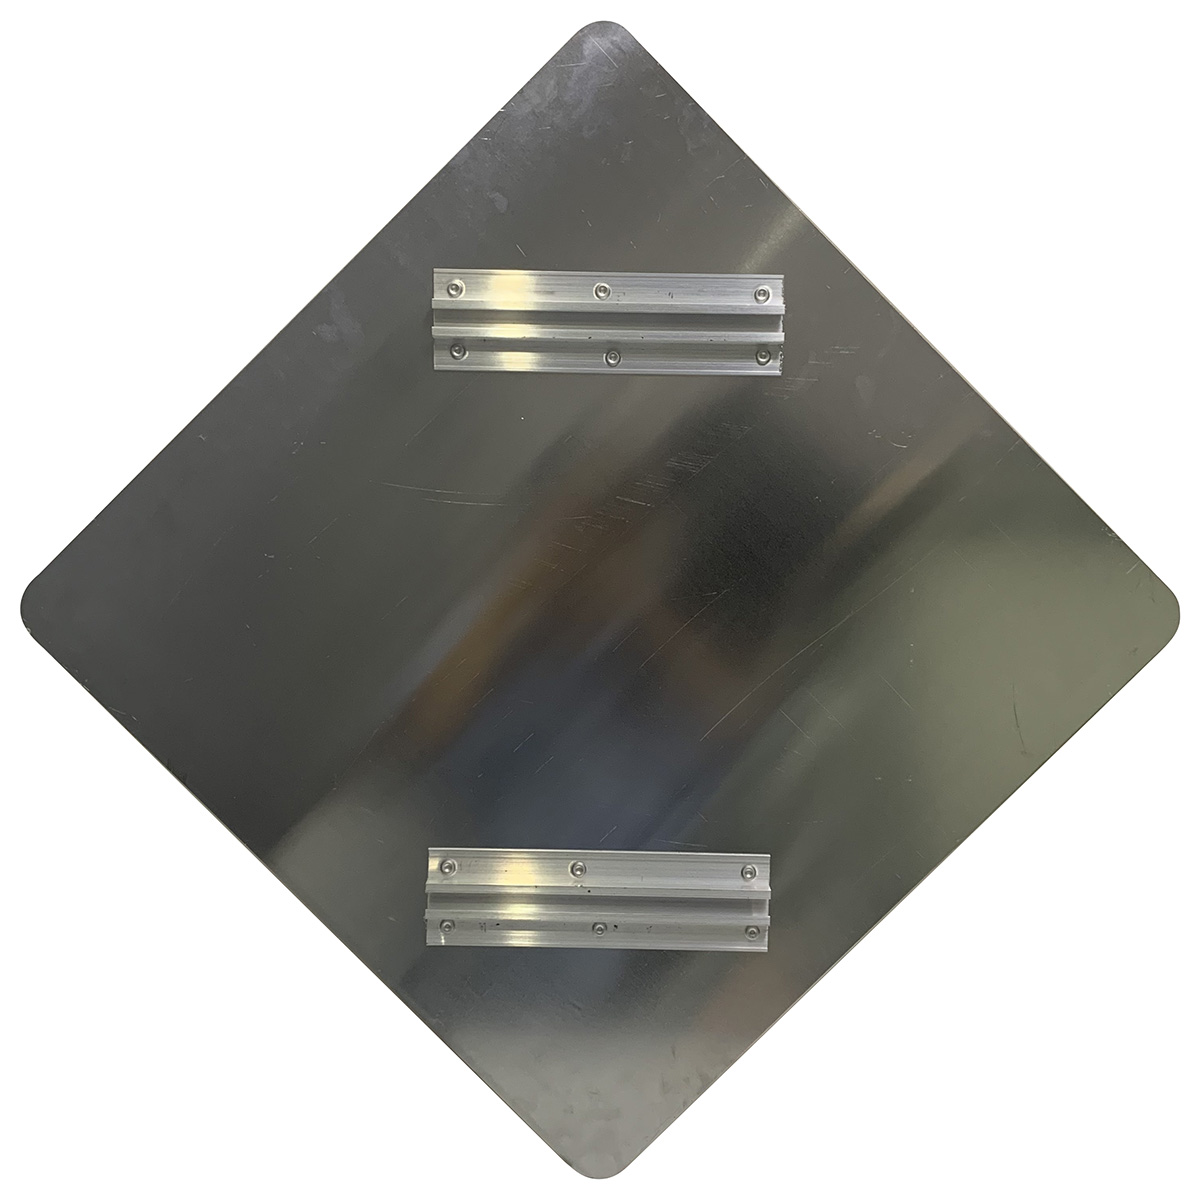 Placa de aluminio reflectante con patrón de rotonda de 60 * 60 cm